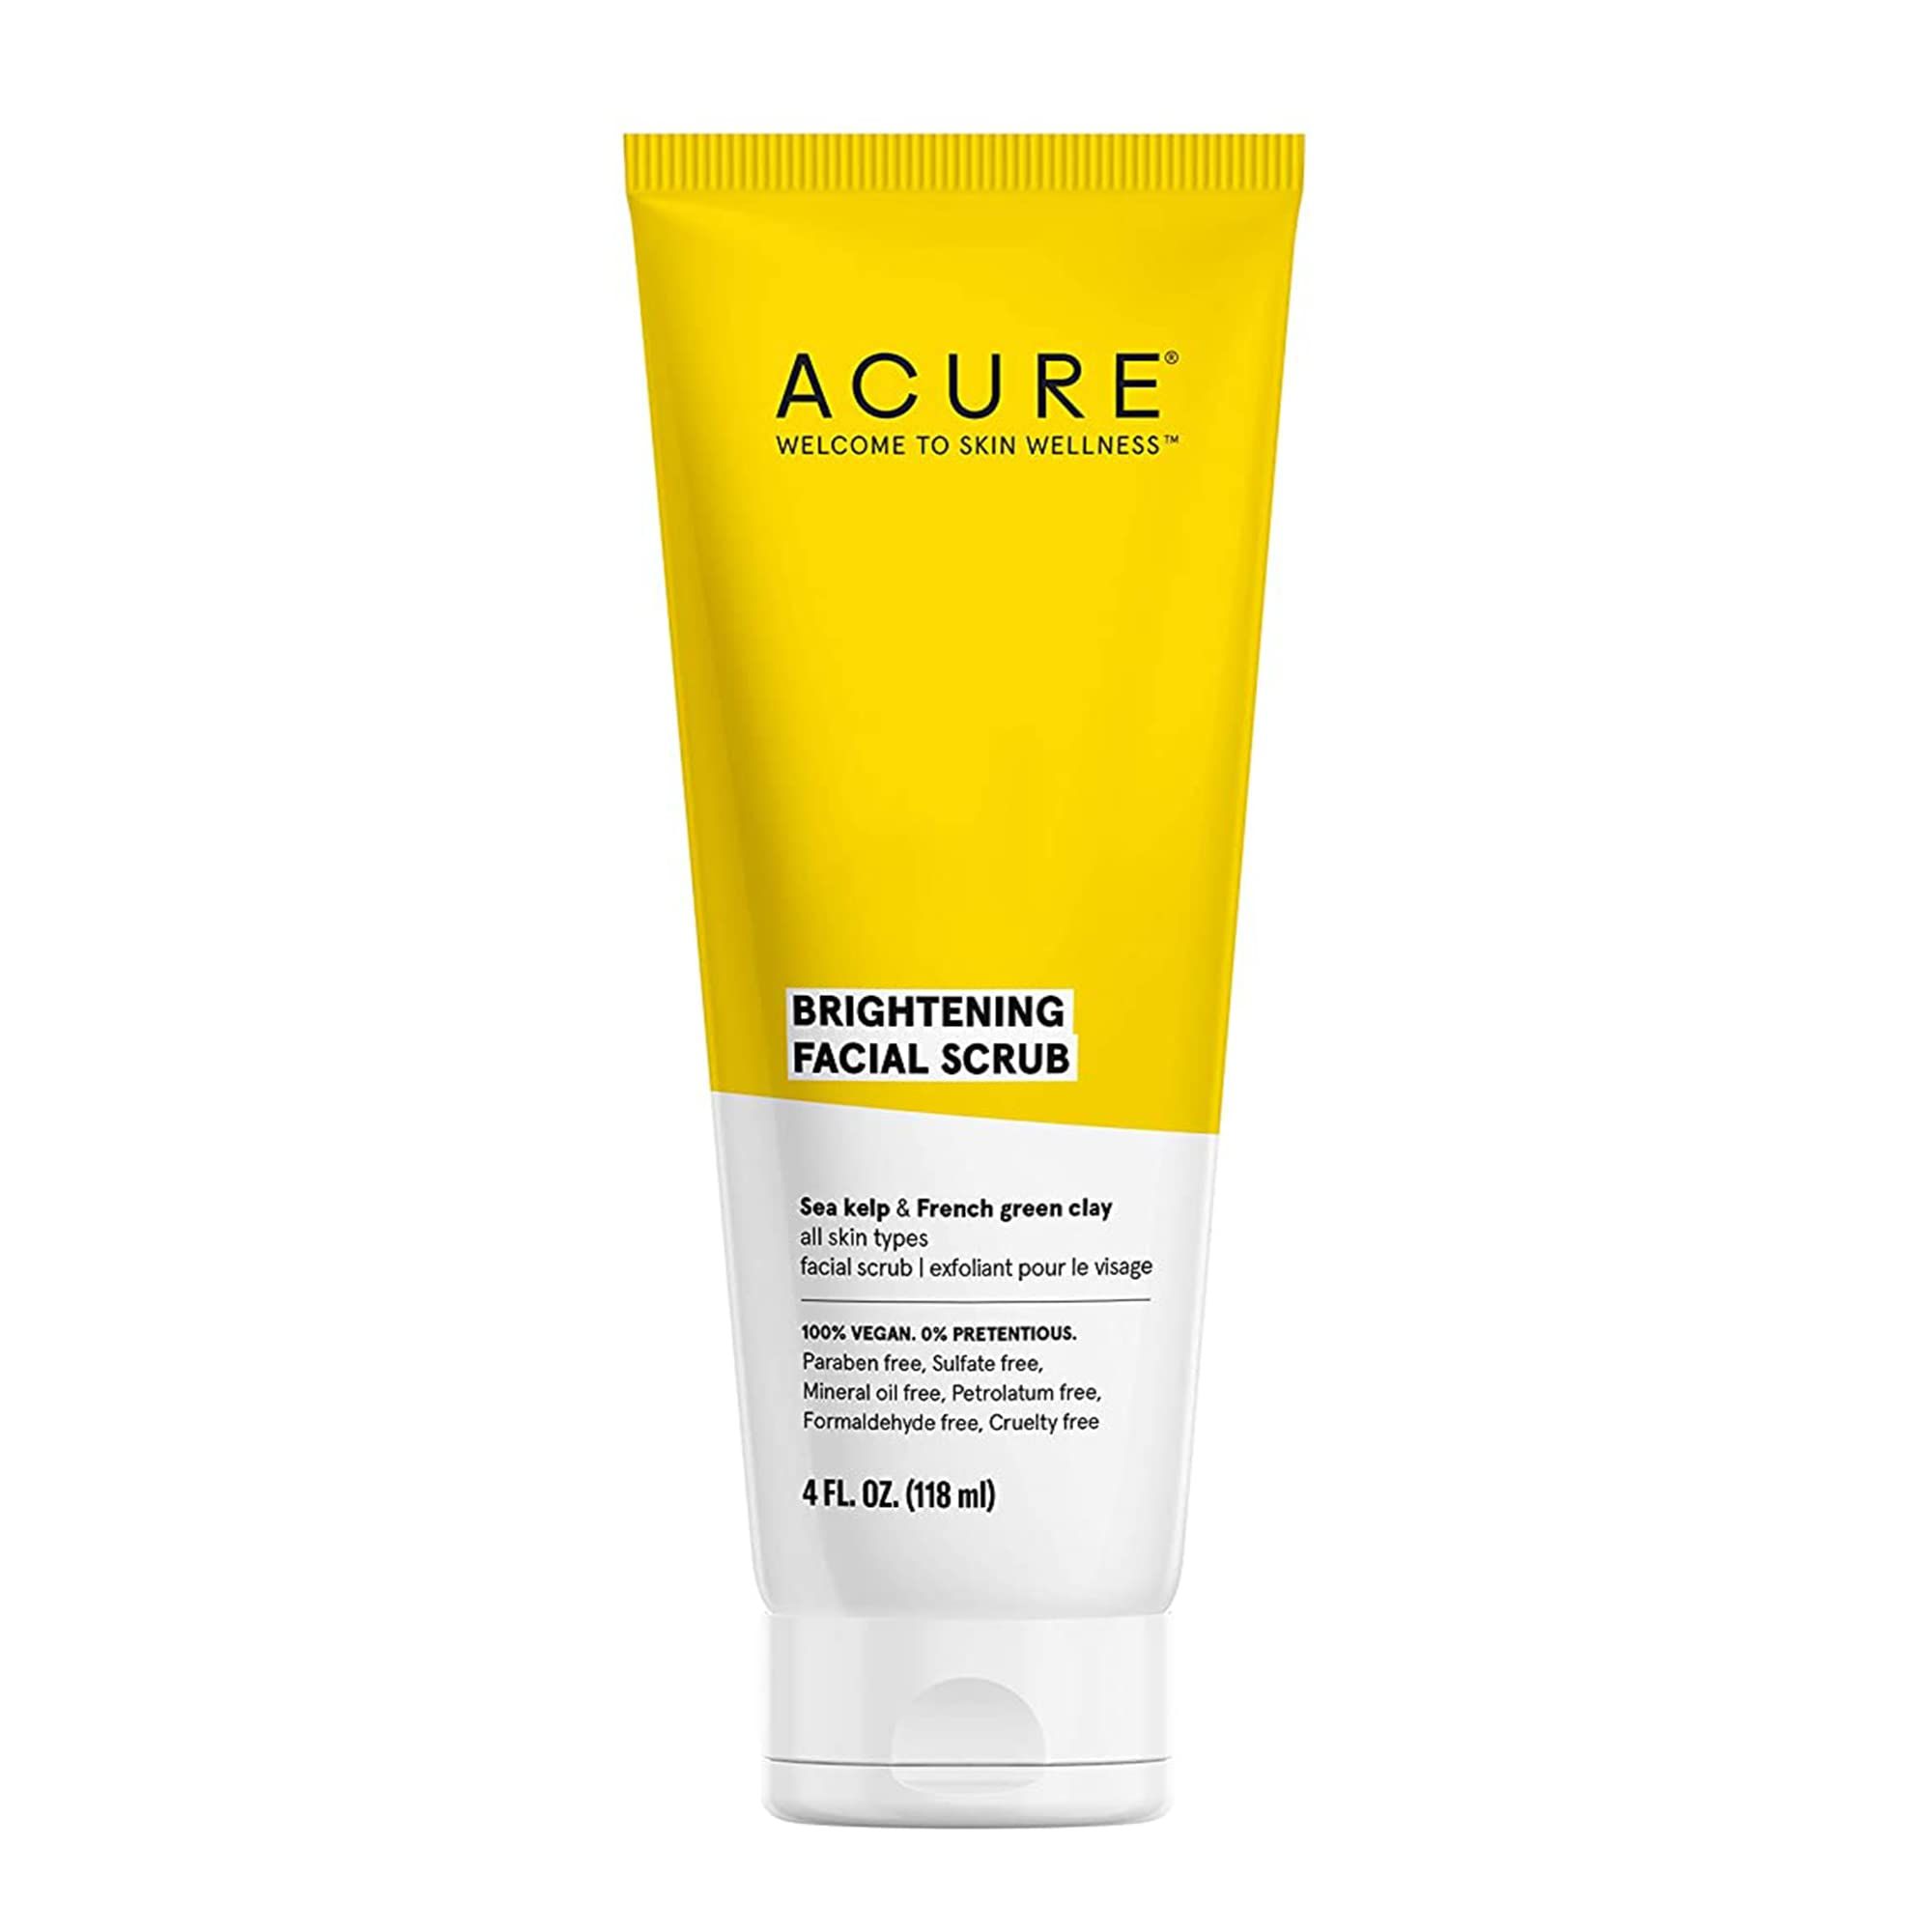 Acure Brightening Facial Scrub - 4 Fl Oz - All Skin Types, Sea Kelp & French Green Clay - Softens, D | Amazon (US)